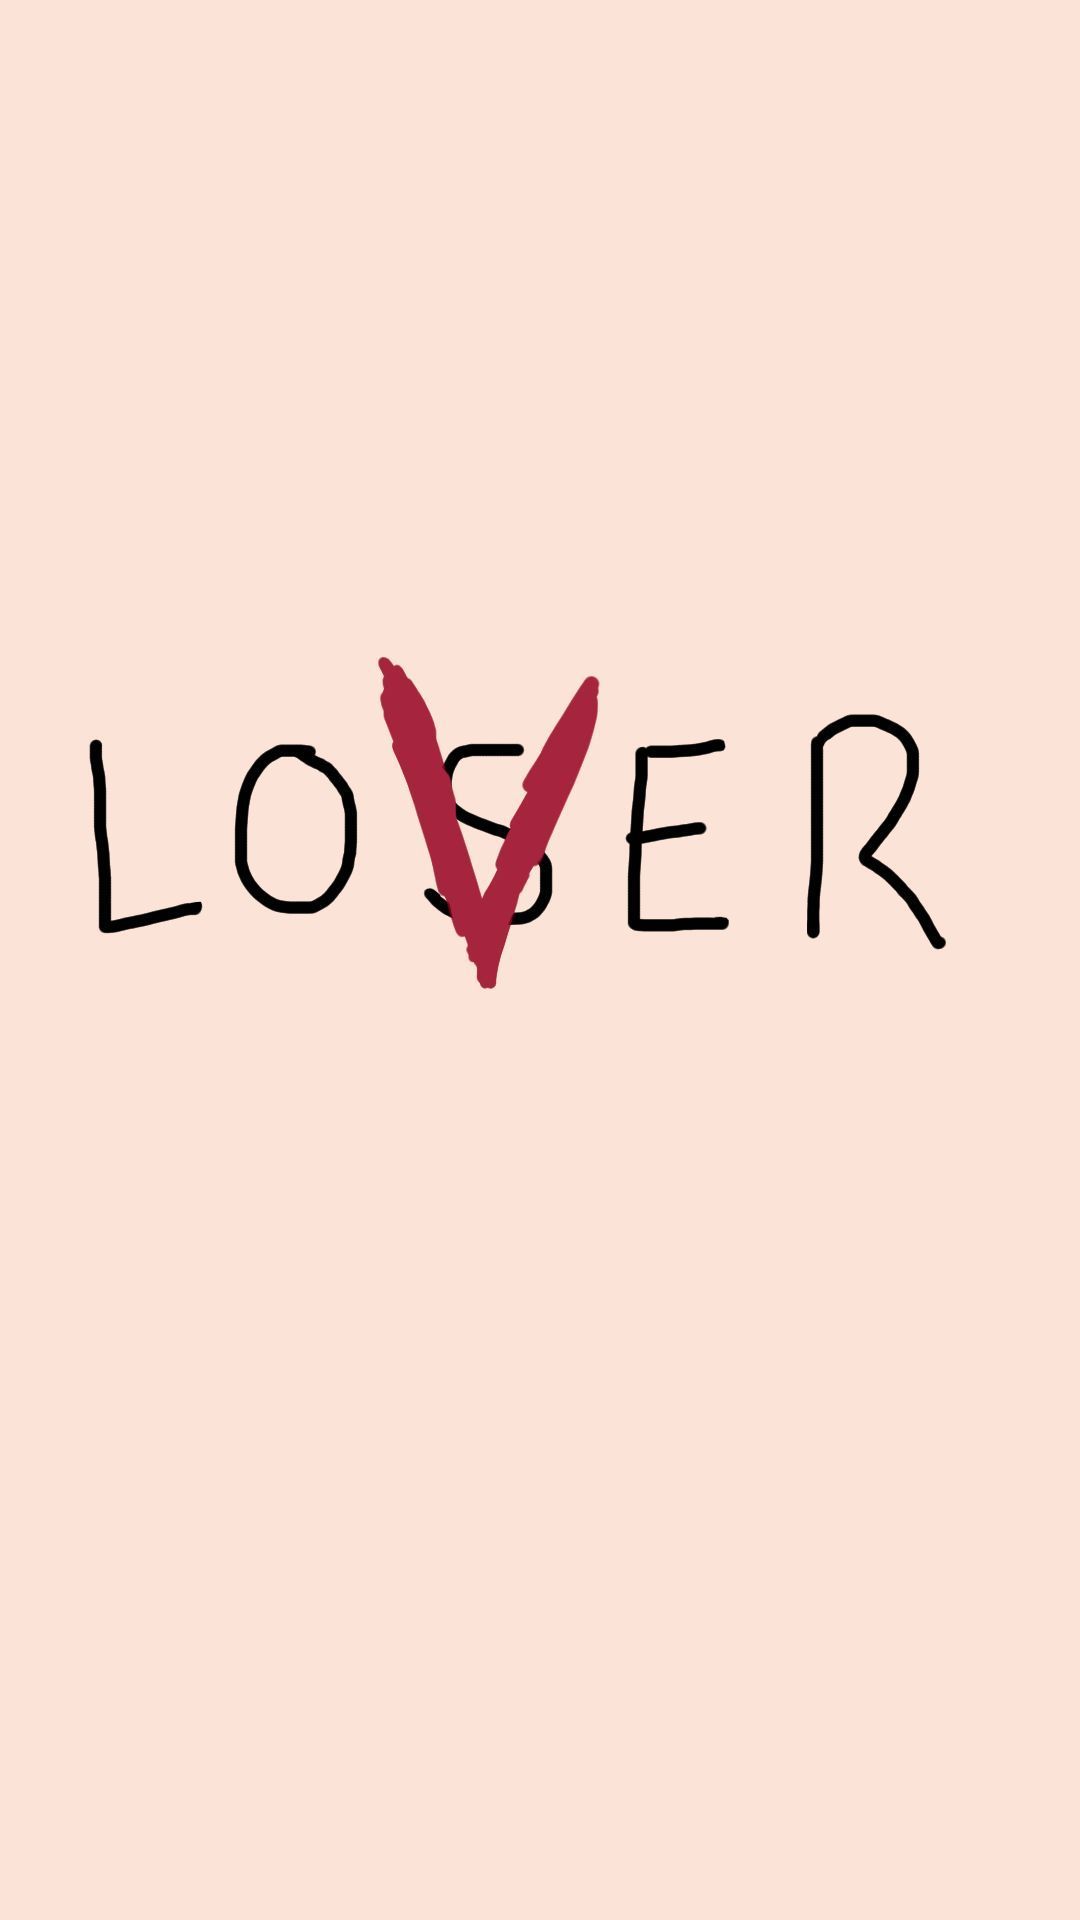 Loser Wallpaper